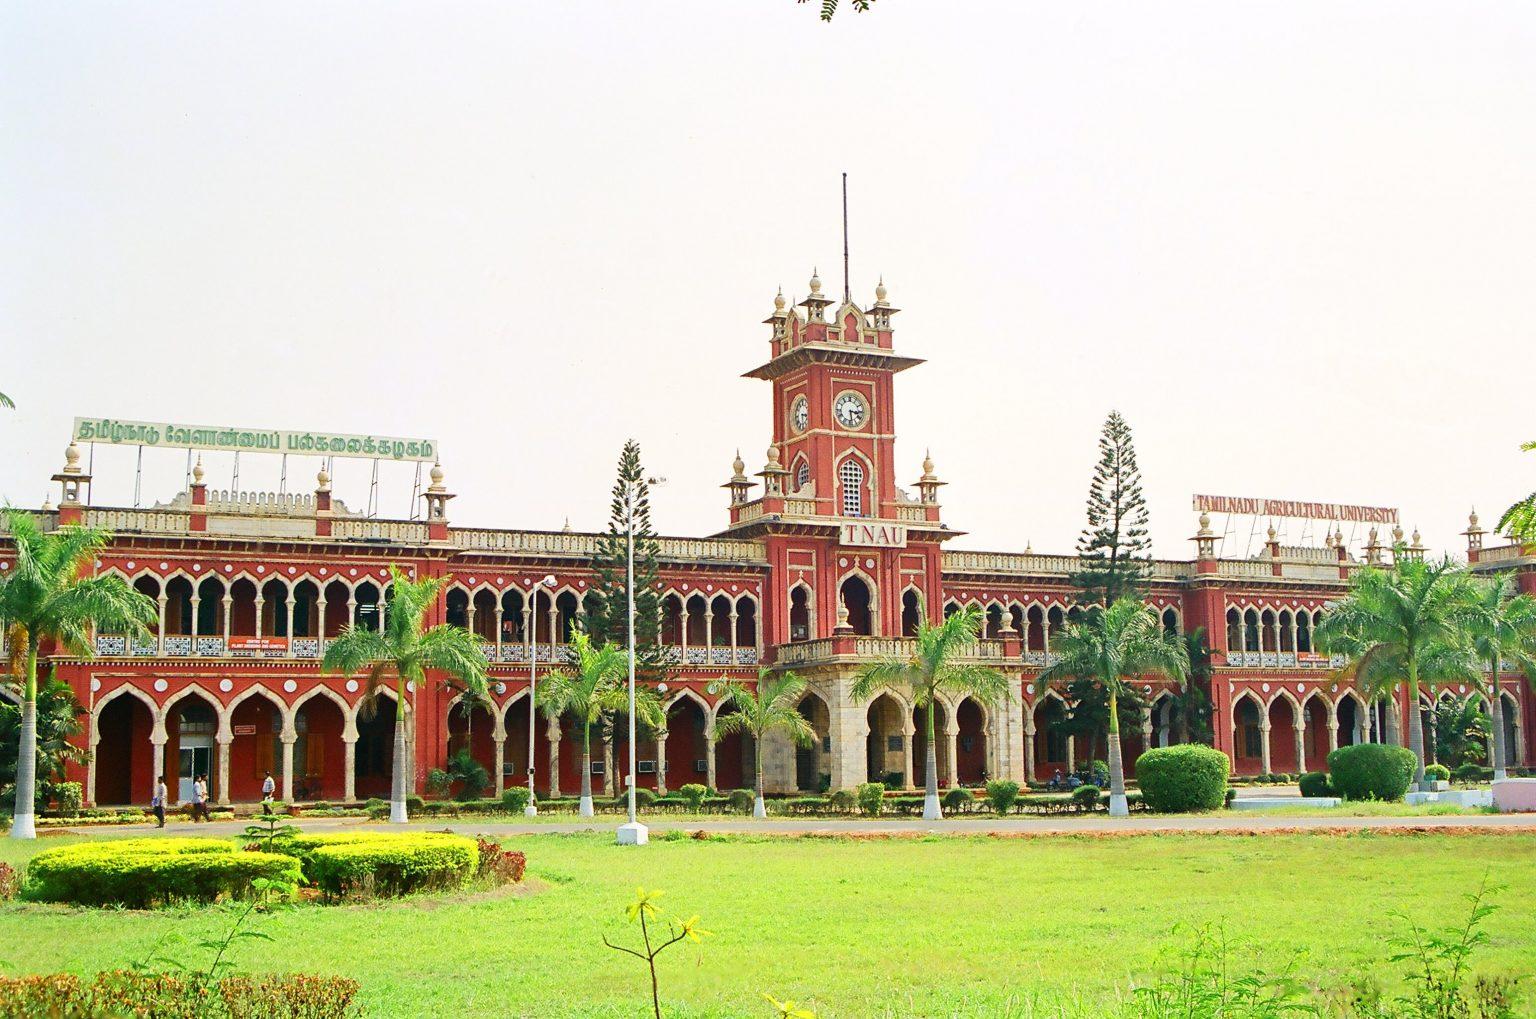 Tamil Nadu Agricultural University